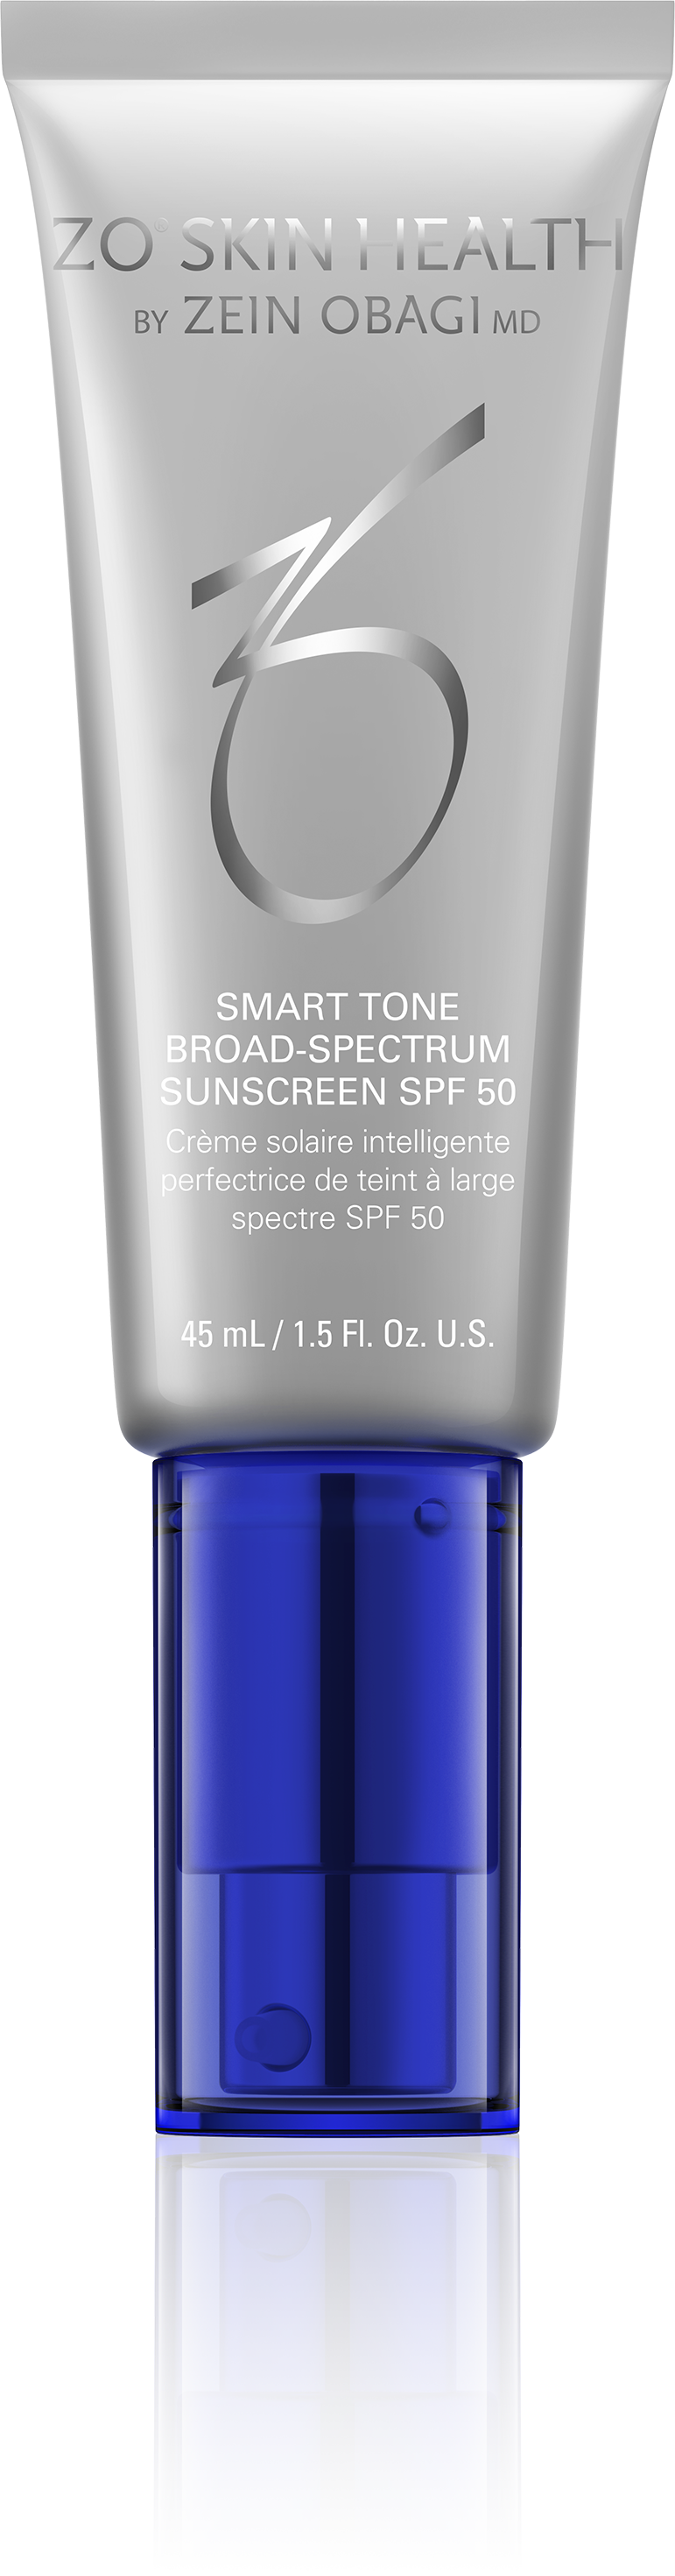 Smart-Tone Broad-Spectrum SPF 50